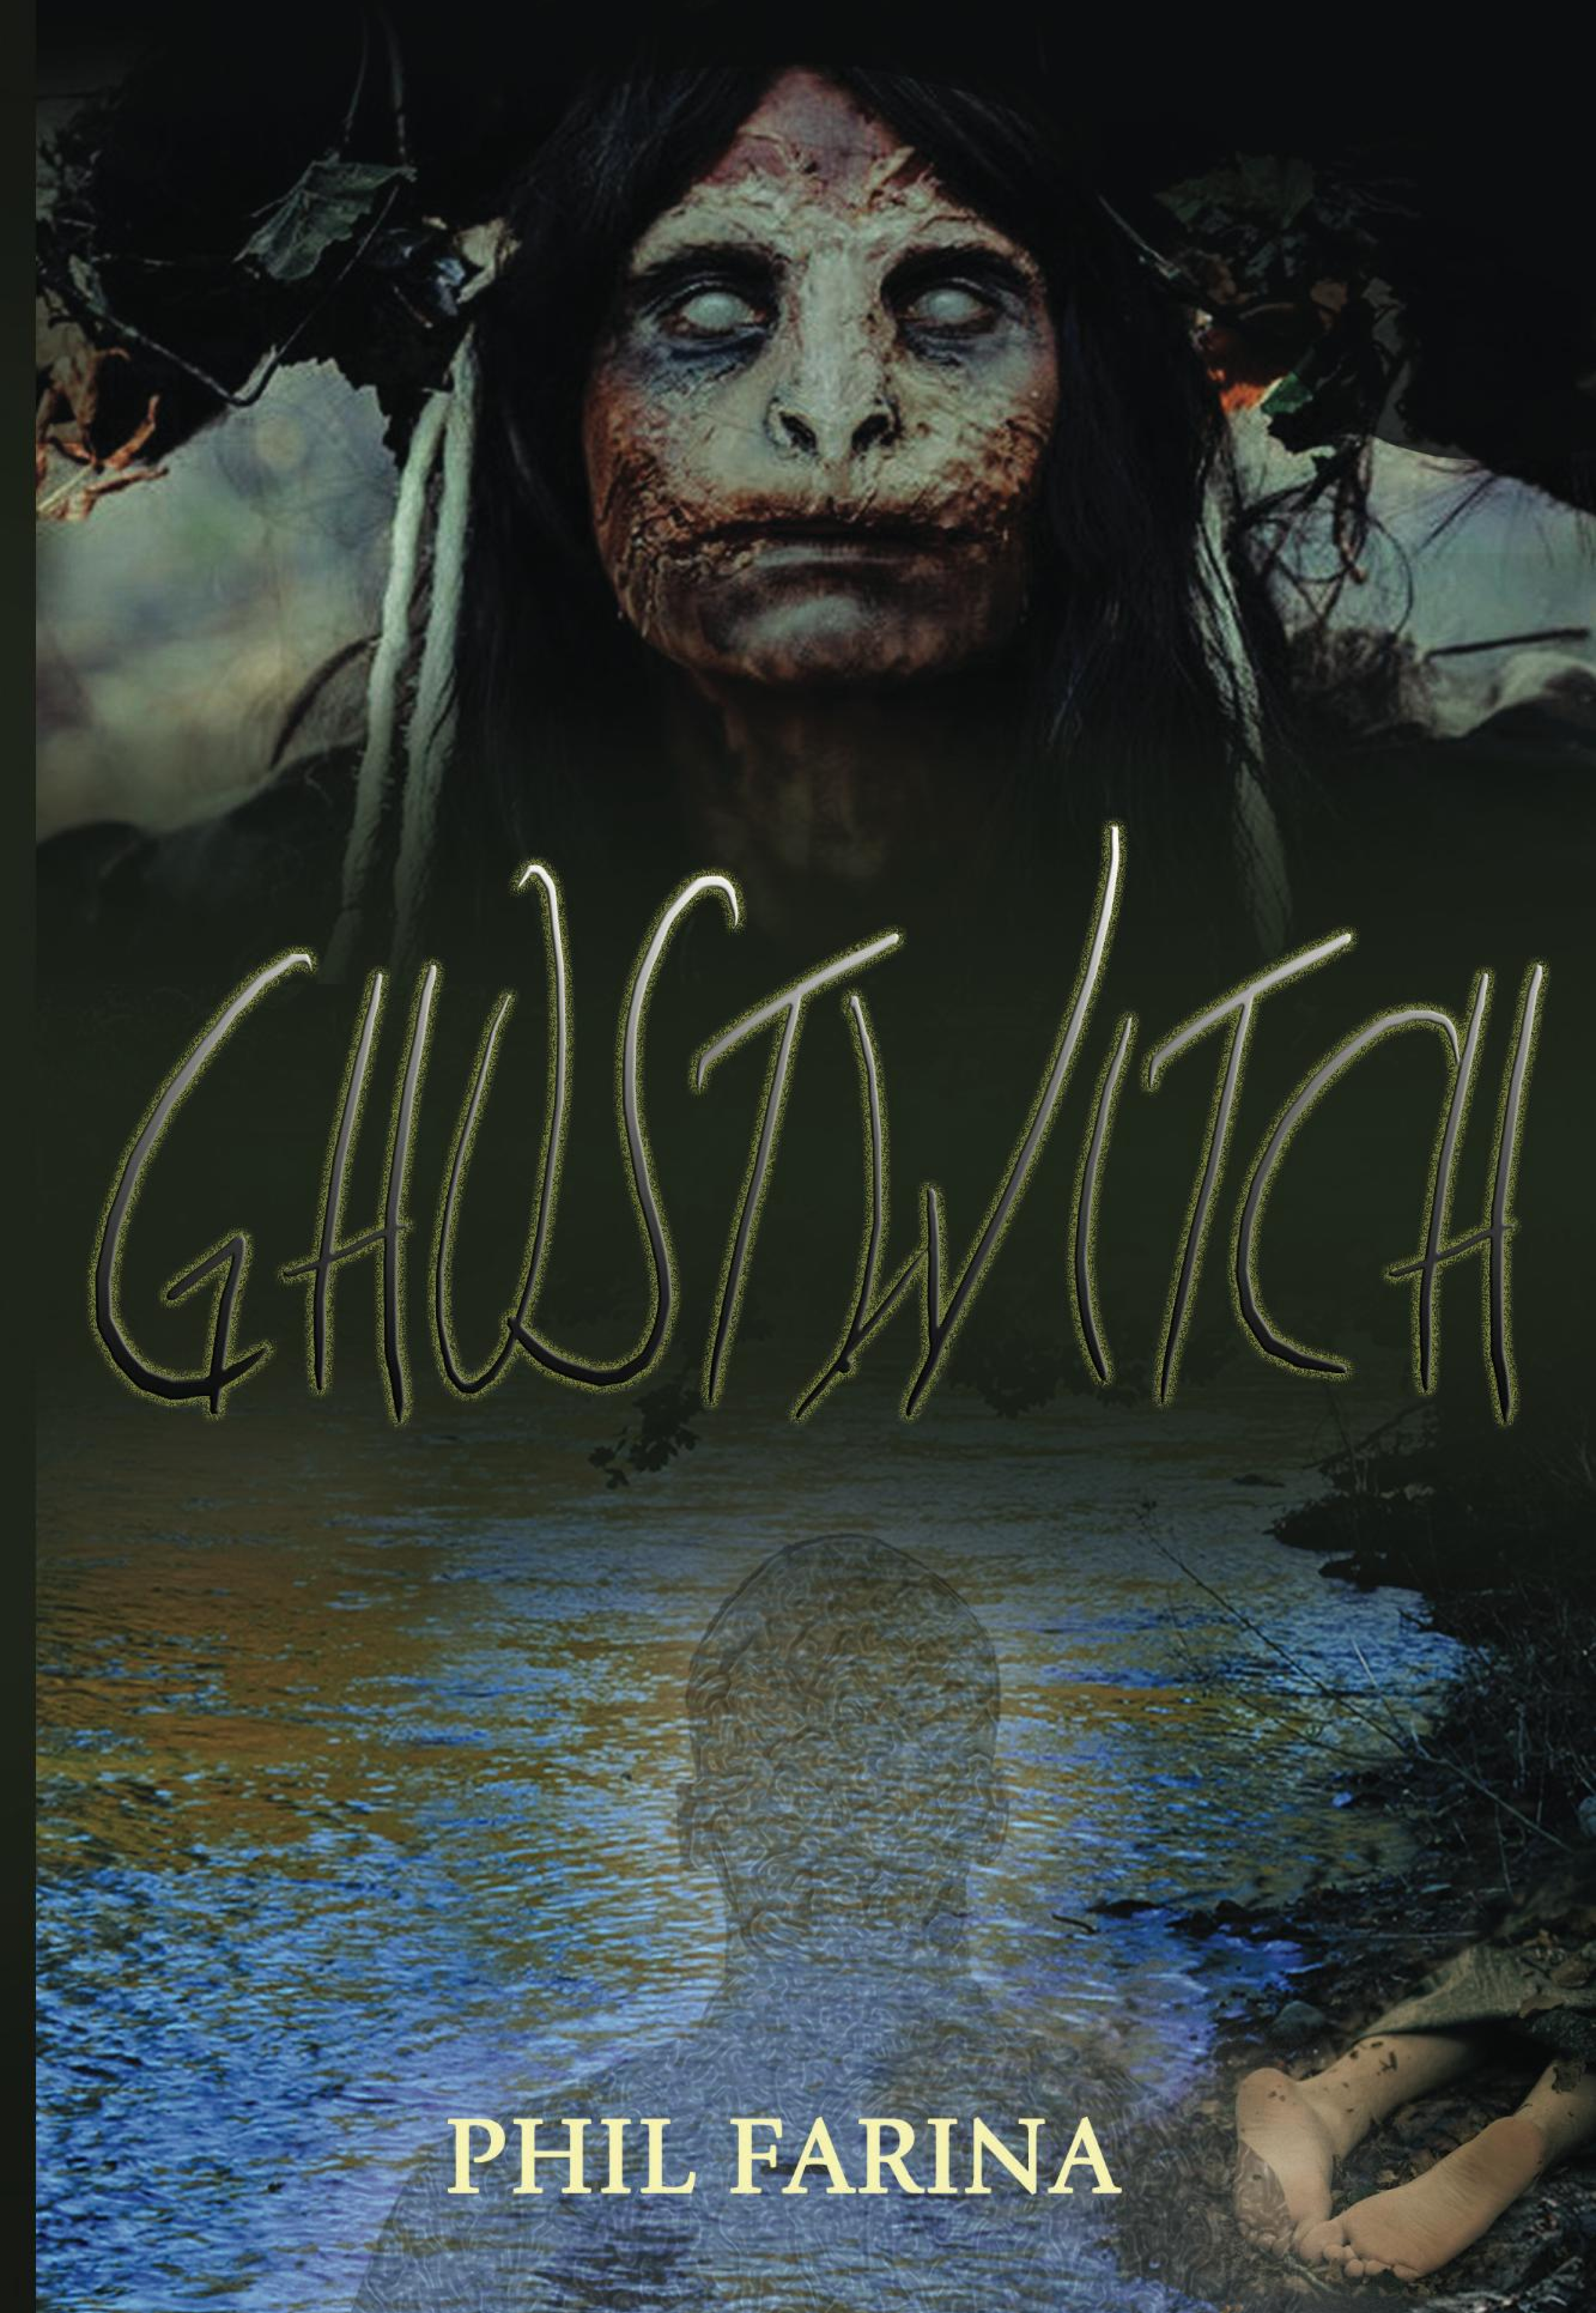 ghostwitch